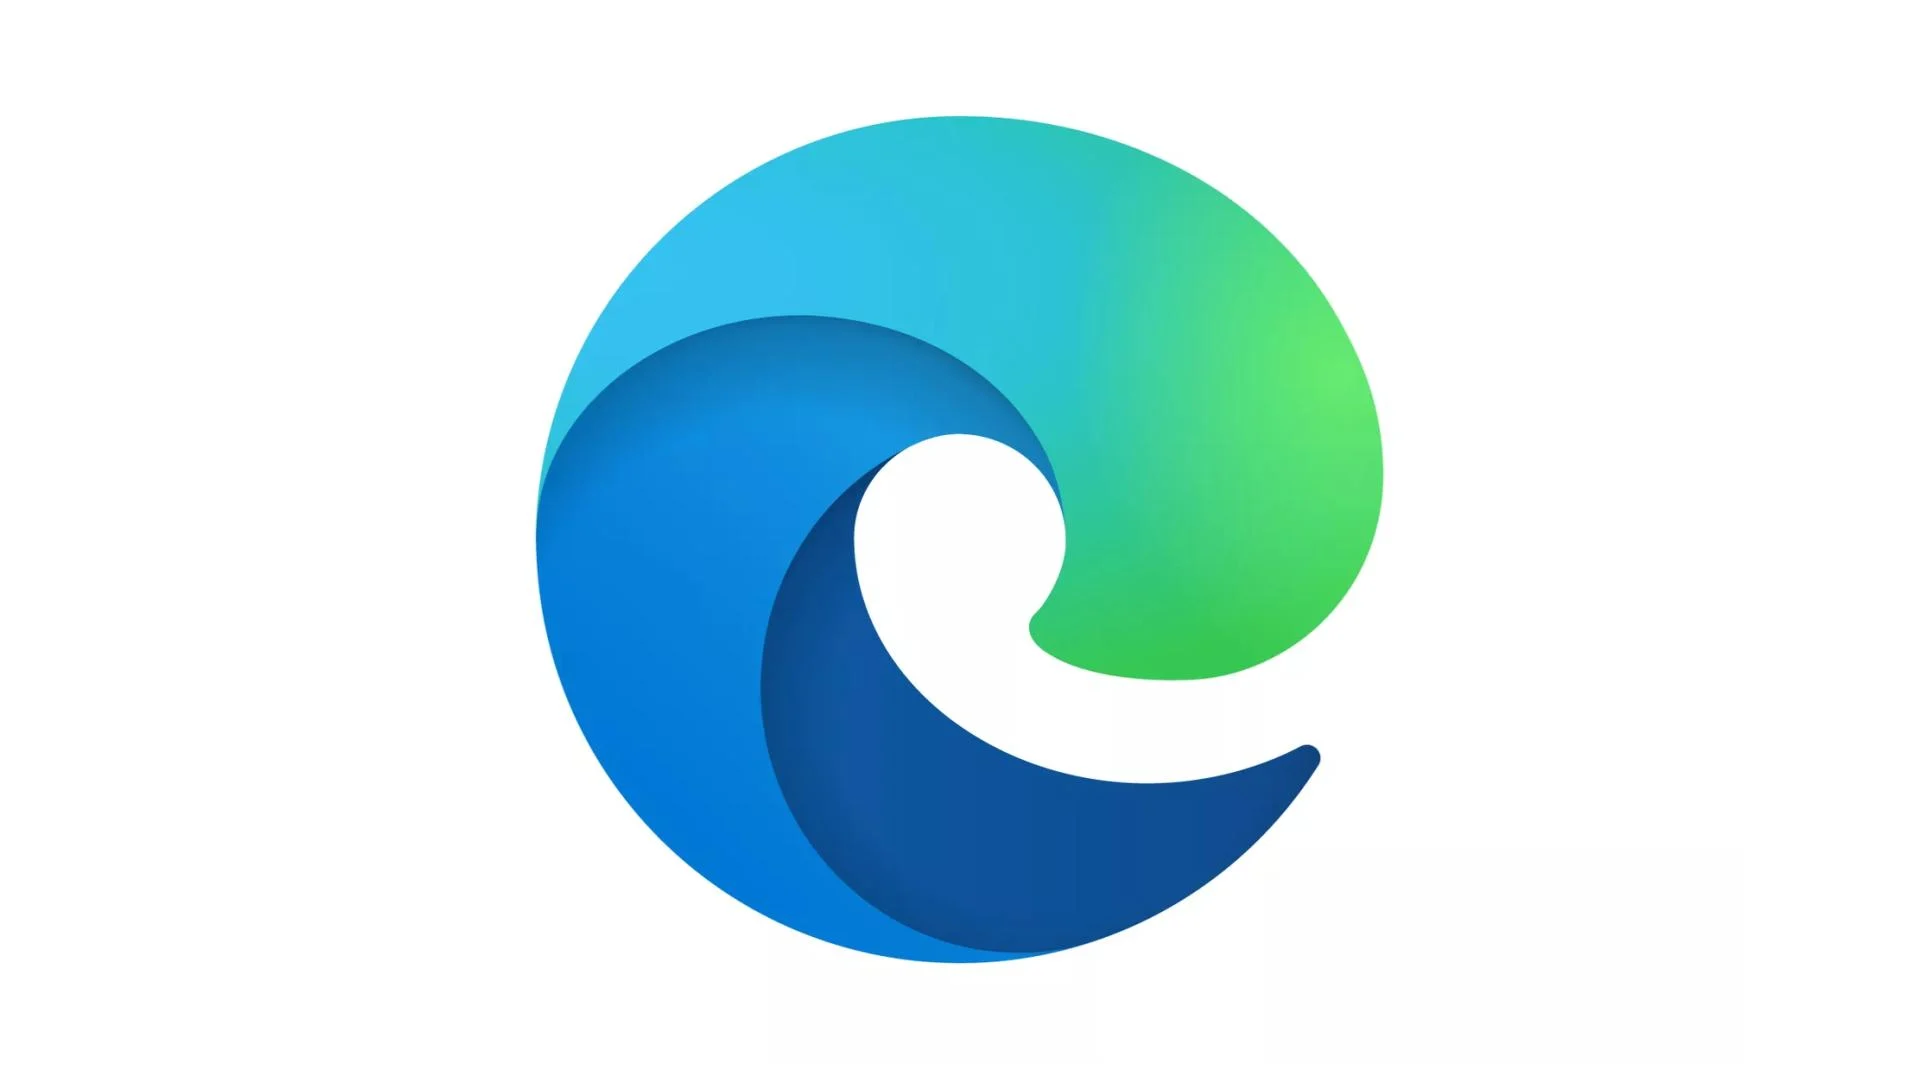 Logo de Microsoft Edge